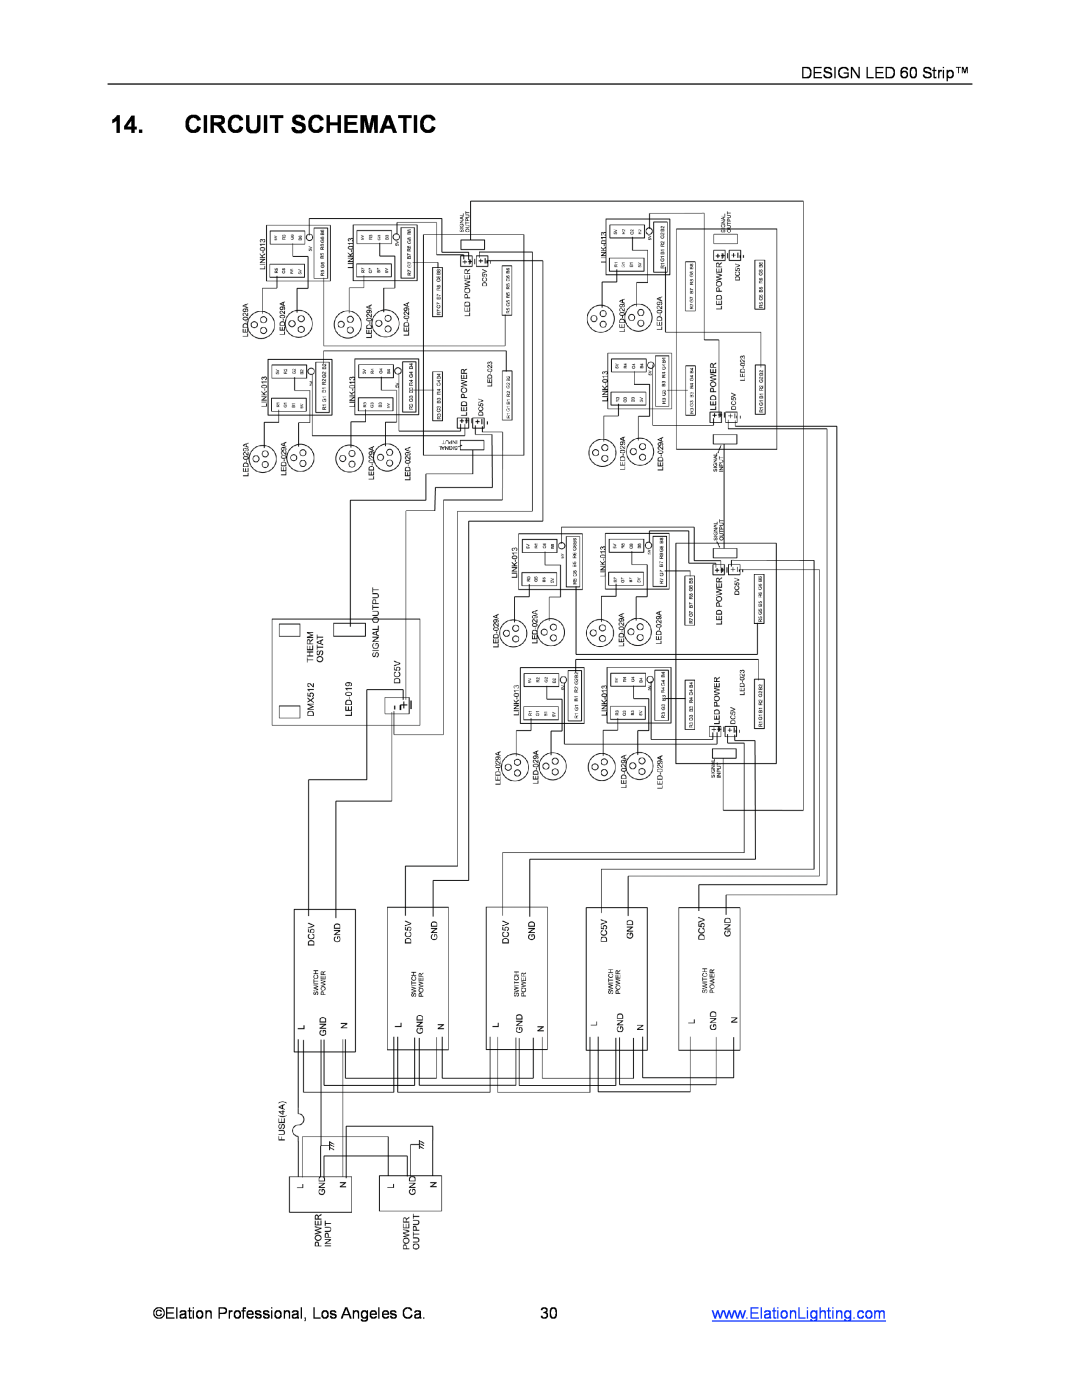 Elation Professional manual Circuit Schematic, DESIGN LED 60 Strip, Elation Professional, Los Angeles Ca 